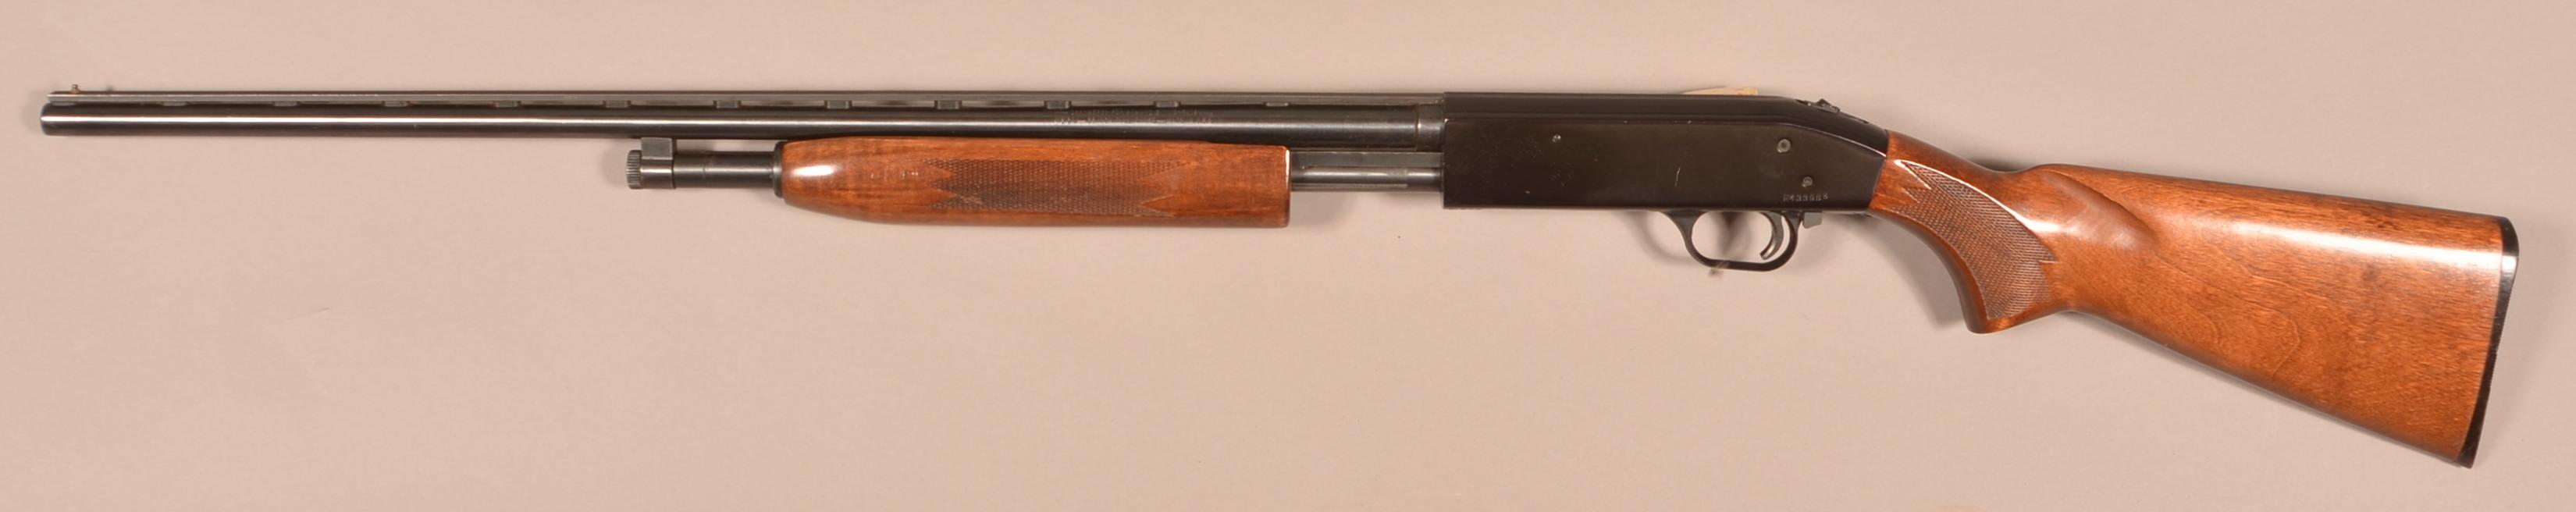 Mossberg mod. 600ET .410 pump action shotgun